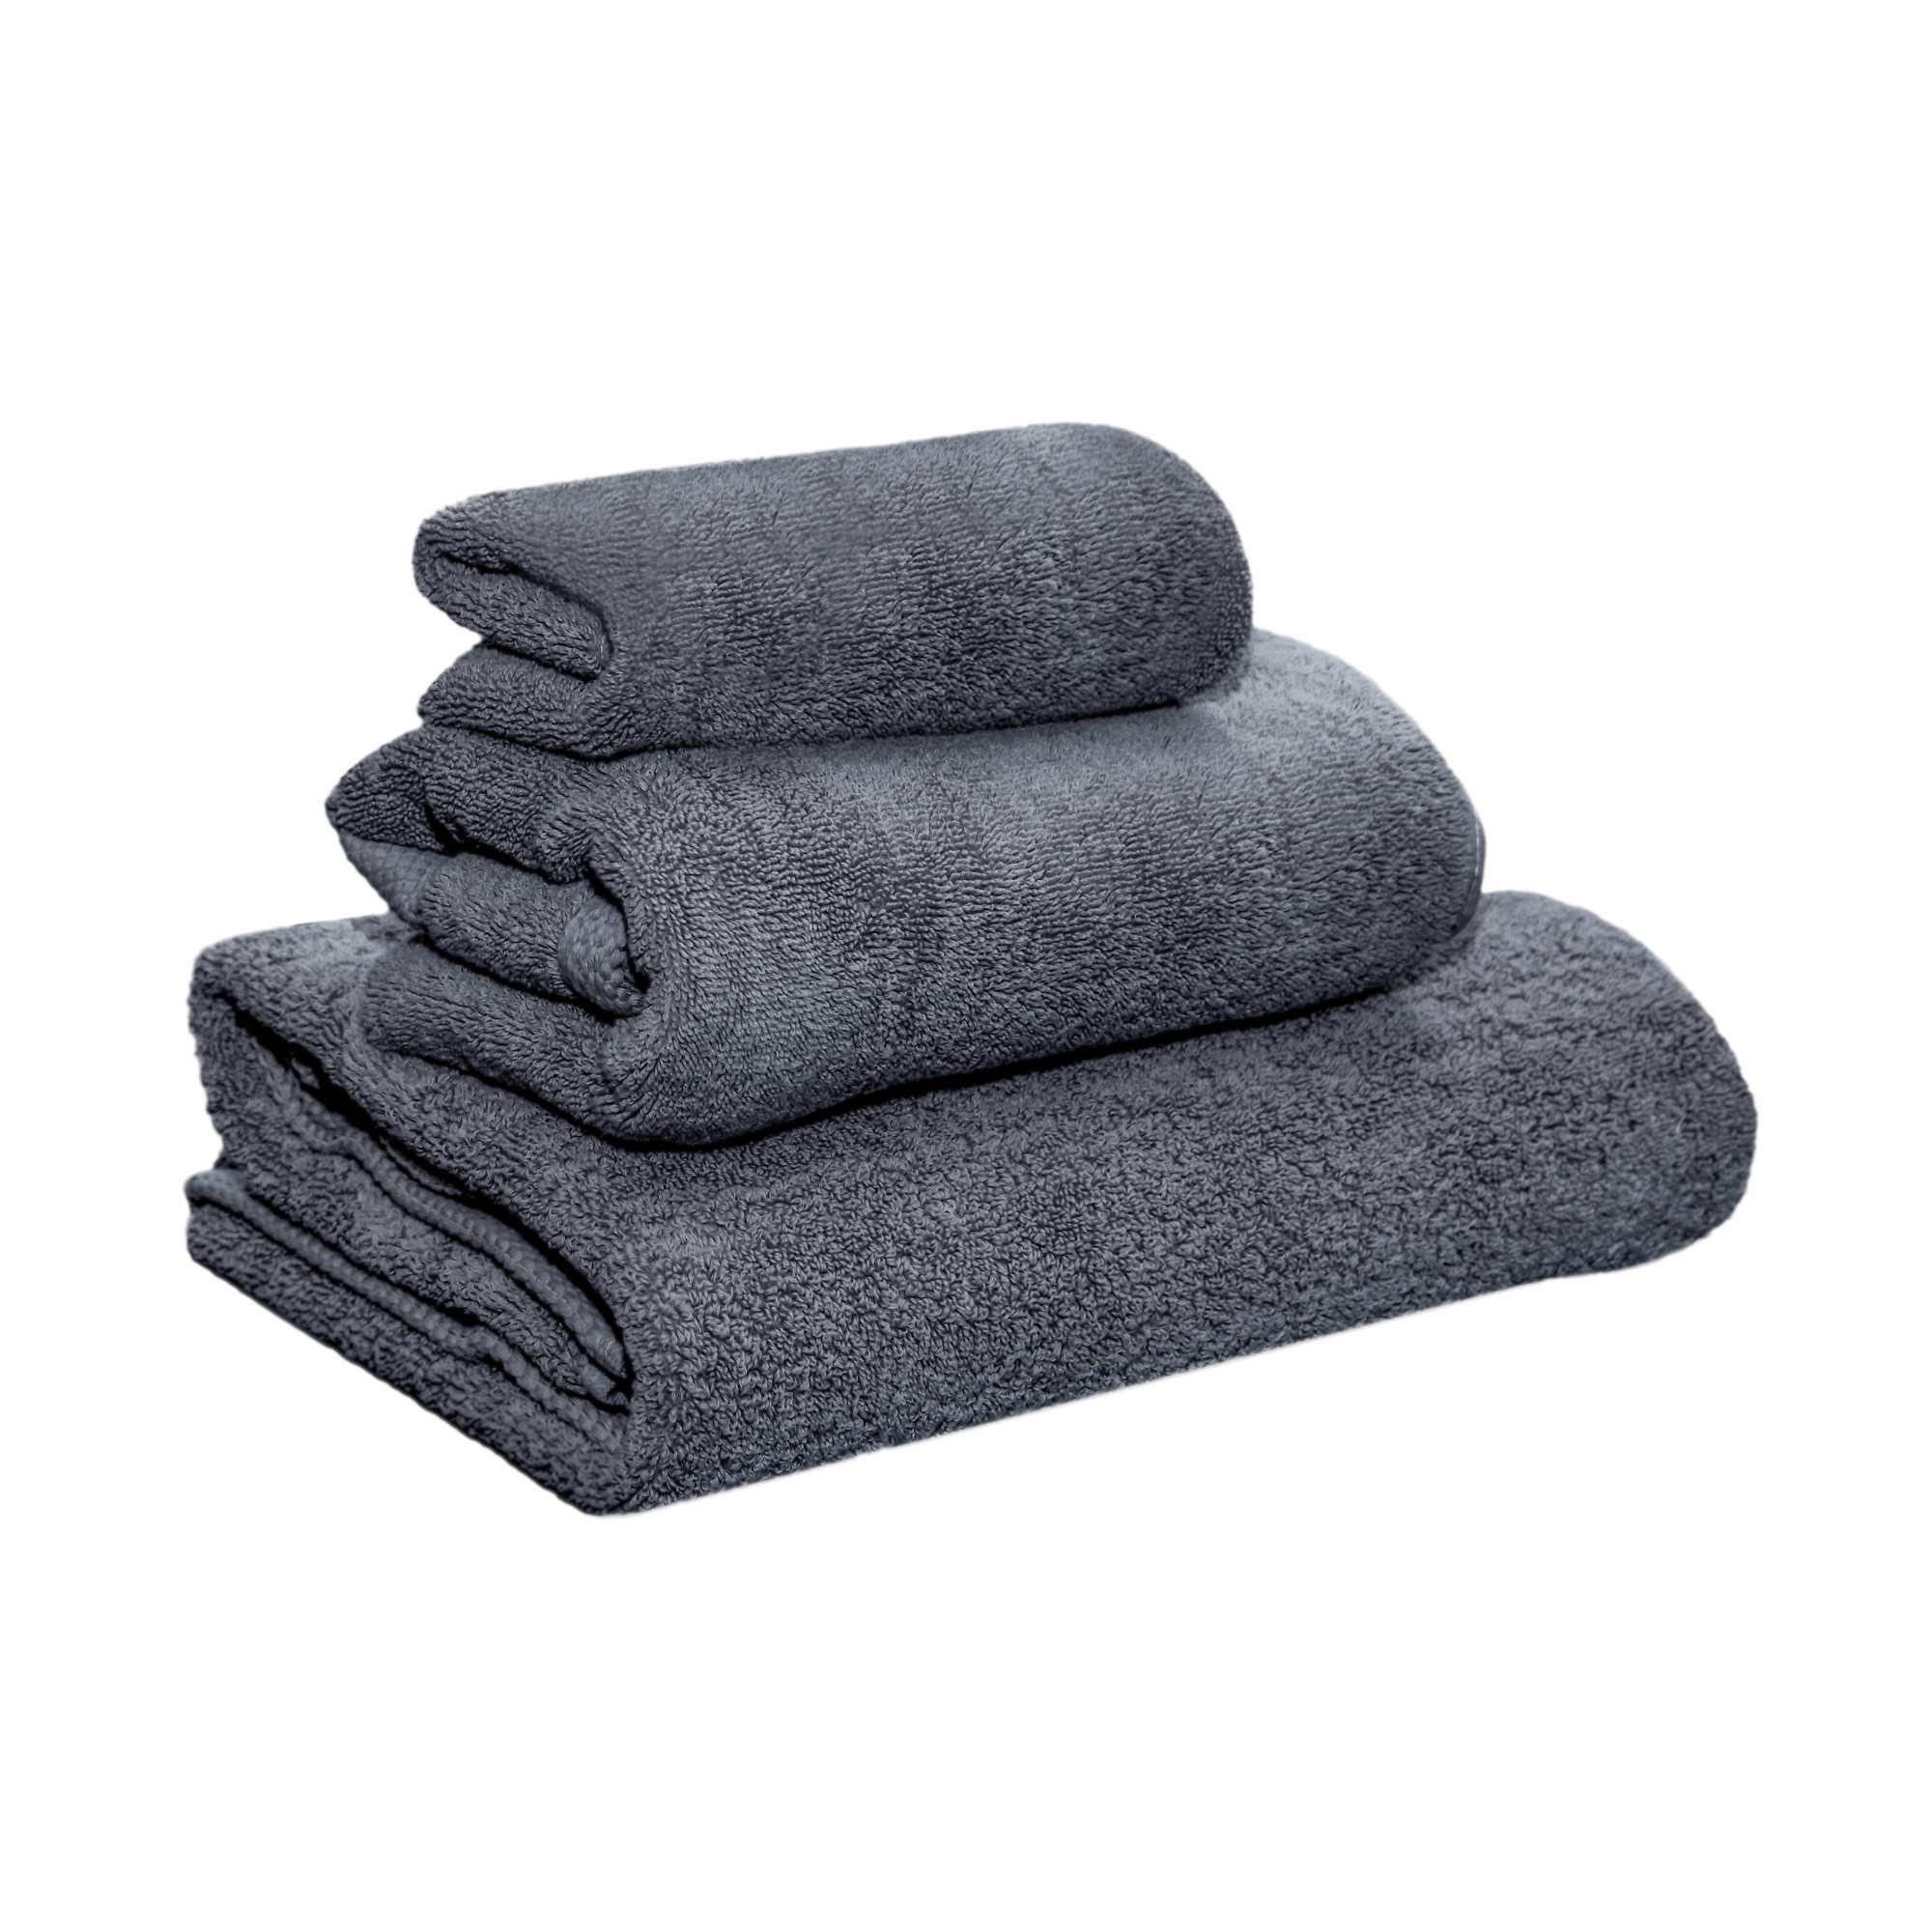 Terry towel 30x50, dark asphalt, 100% cotton